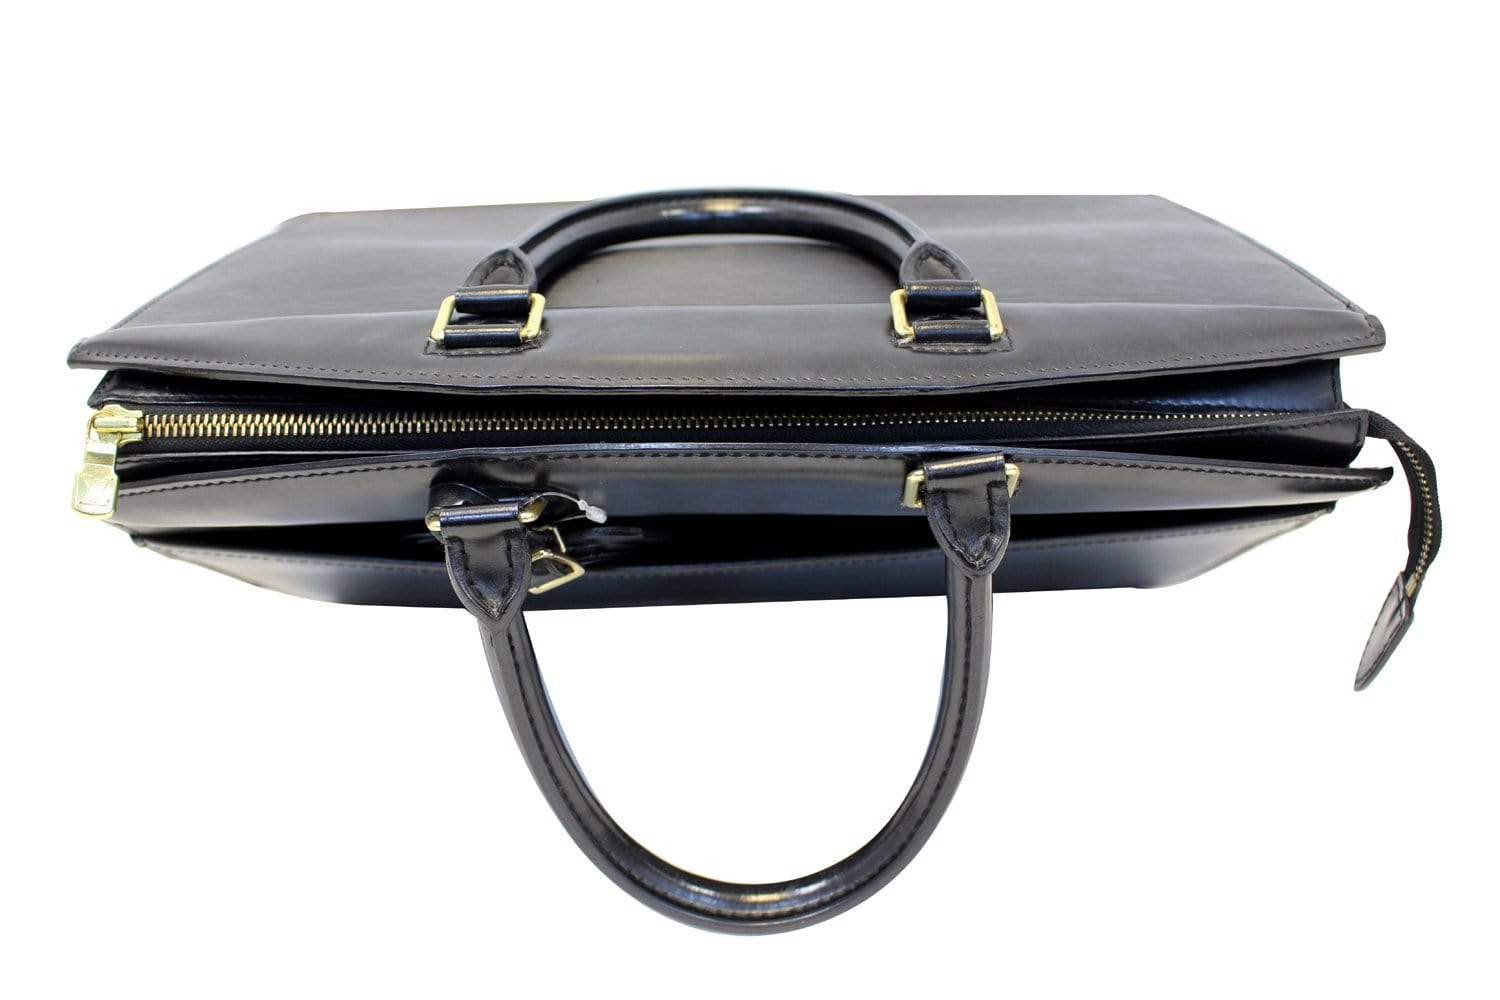 LOUIS VUITTON Epi Leather Riviera Black Travel Bag